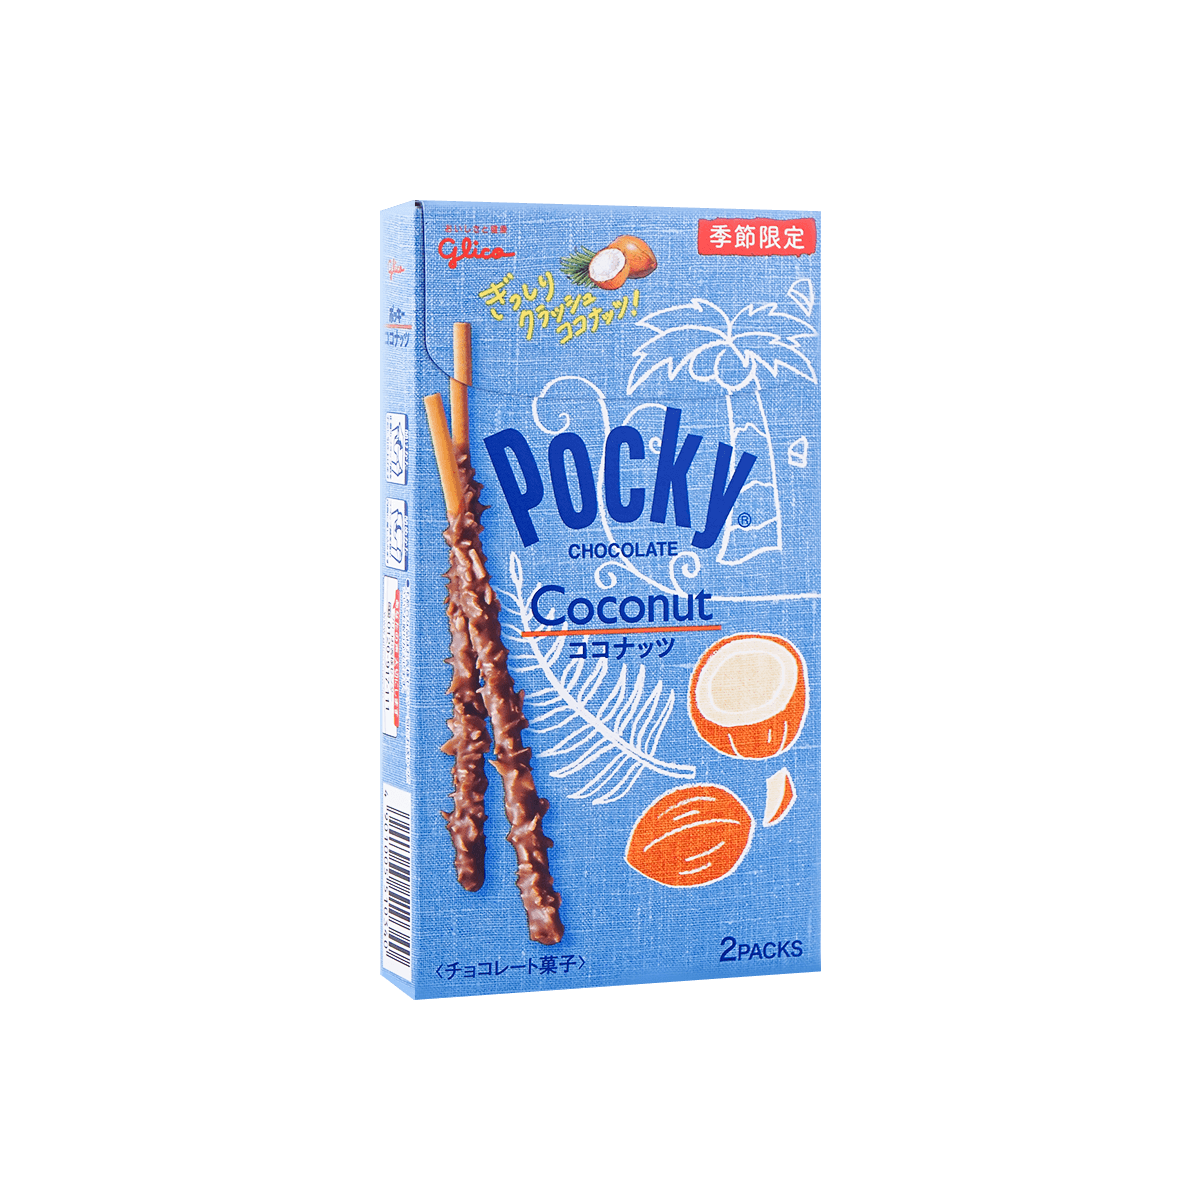 Yamibuy.com:Customer reviews:Pocky Coconut Flavor Limited Edition 1.45oz